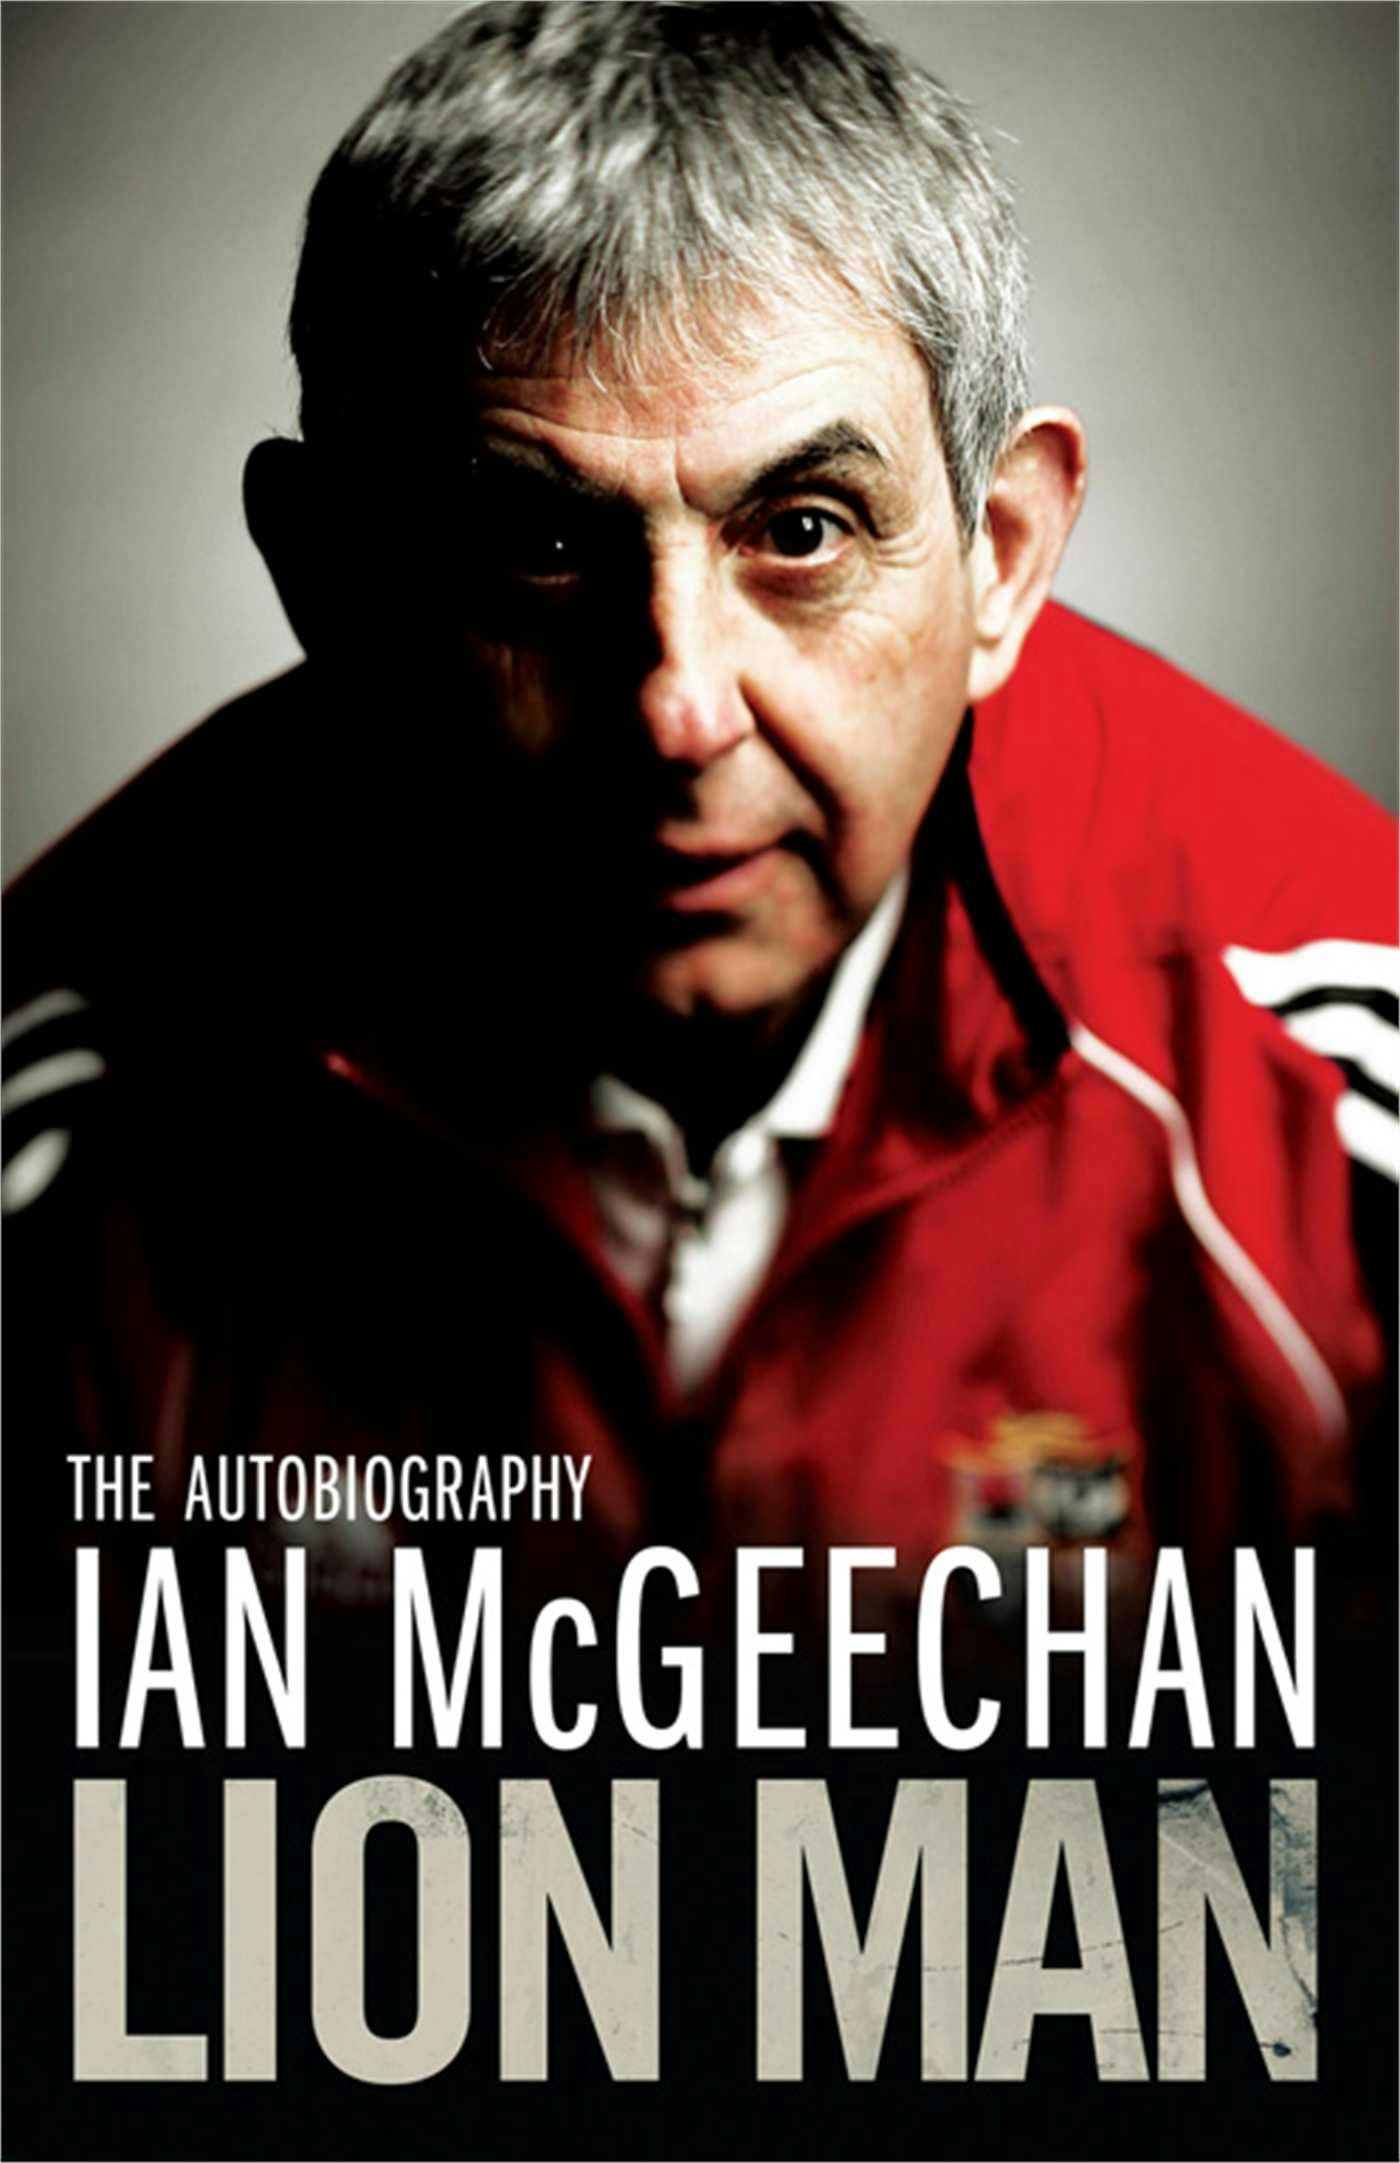 Lion Man: The Autobiography - Ian McGeechan